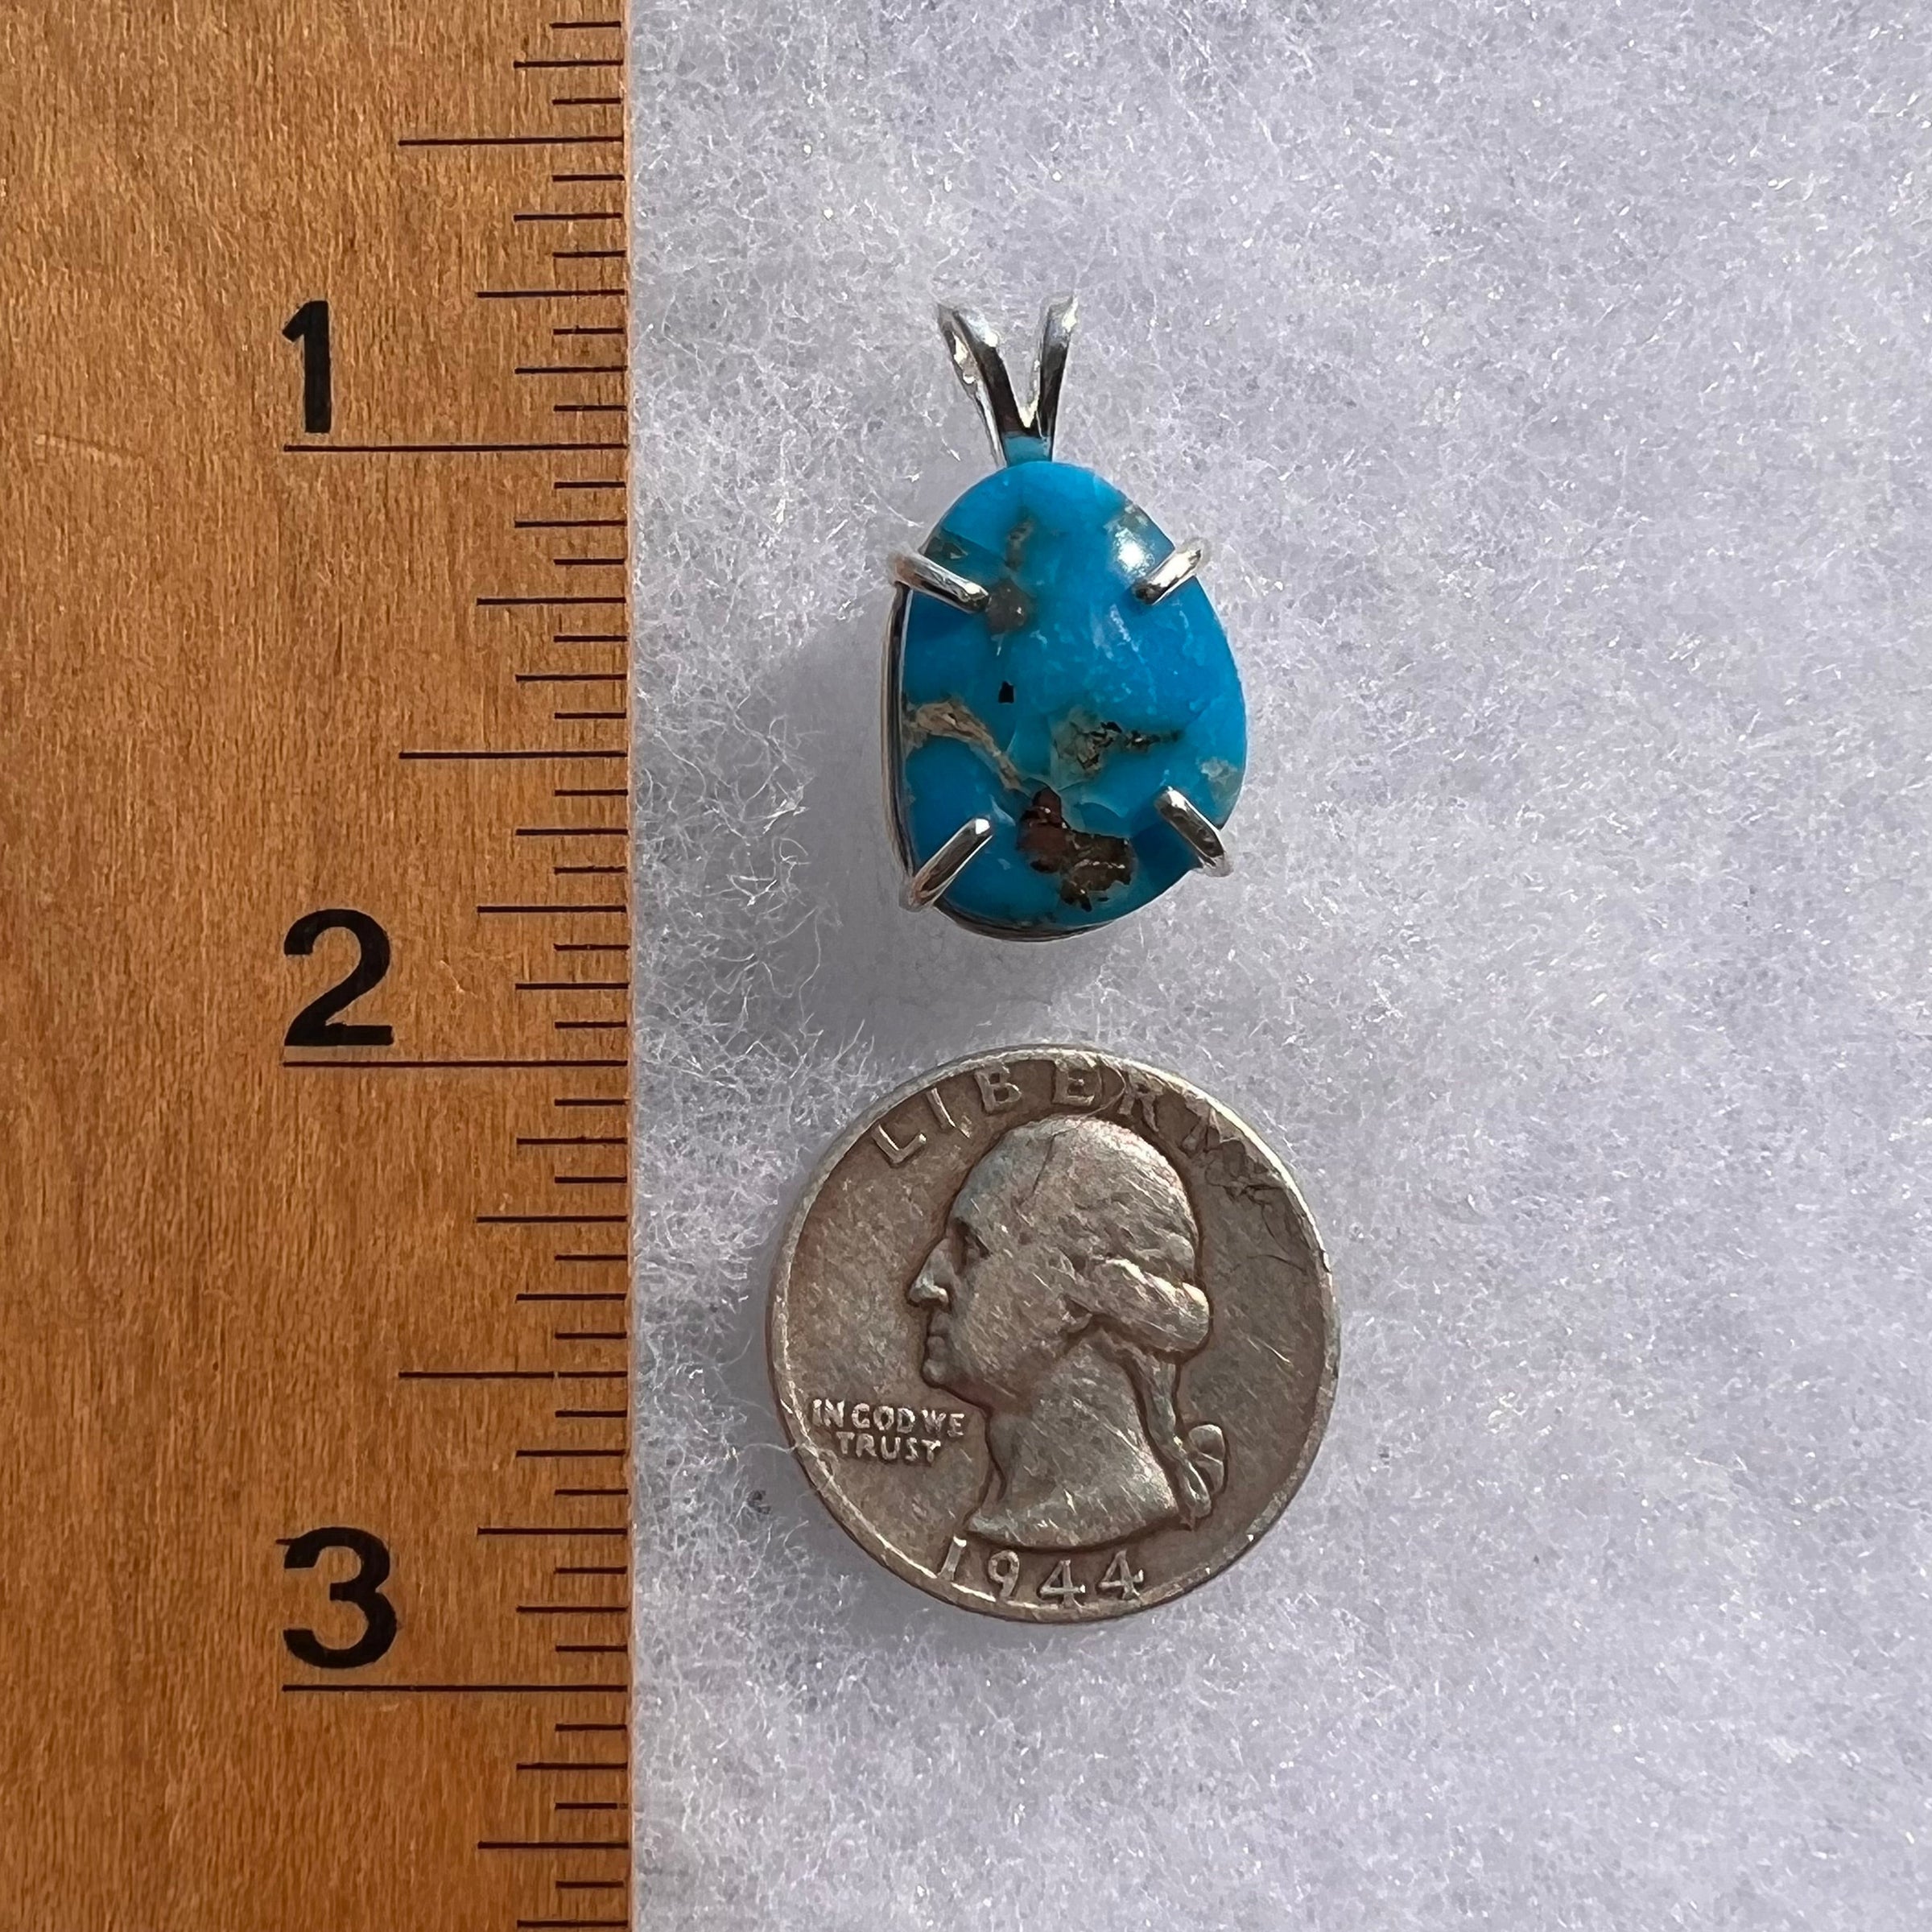 Morenci Turquoise Pendant Sterling Silver #2803-Moldavite Life